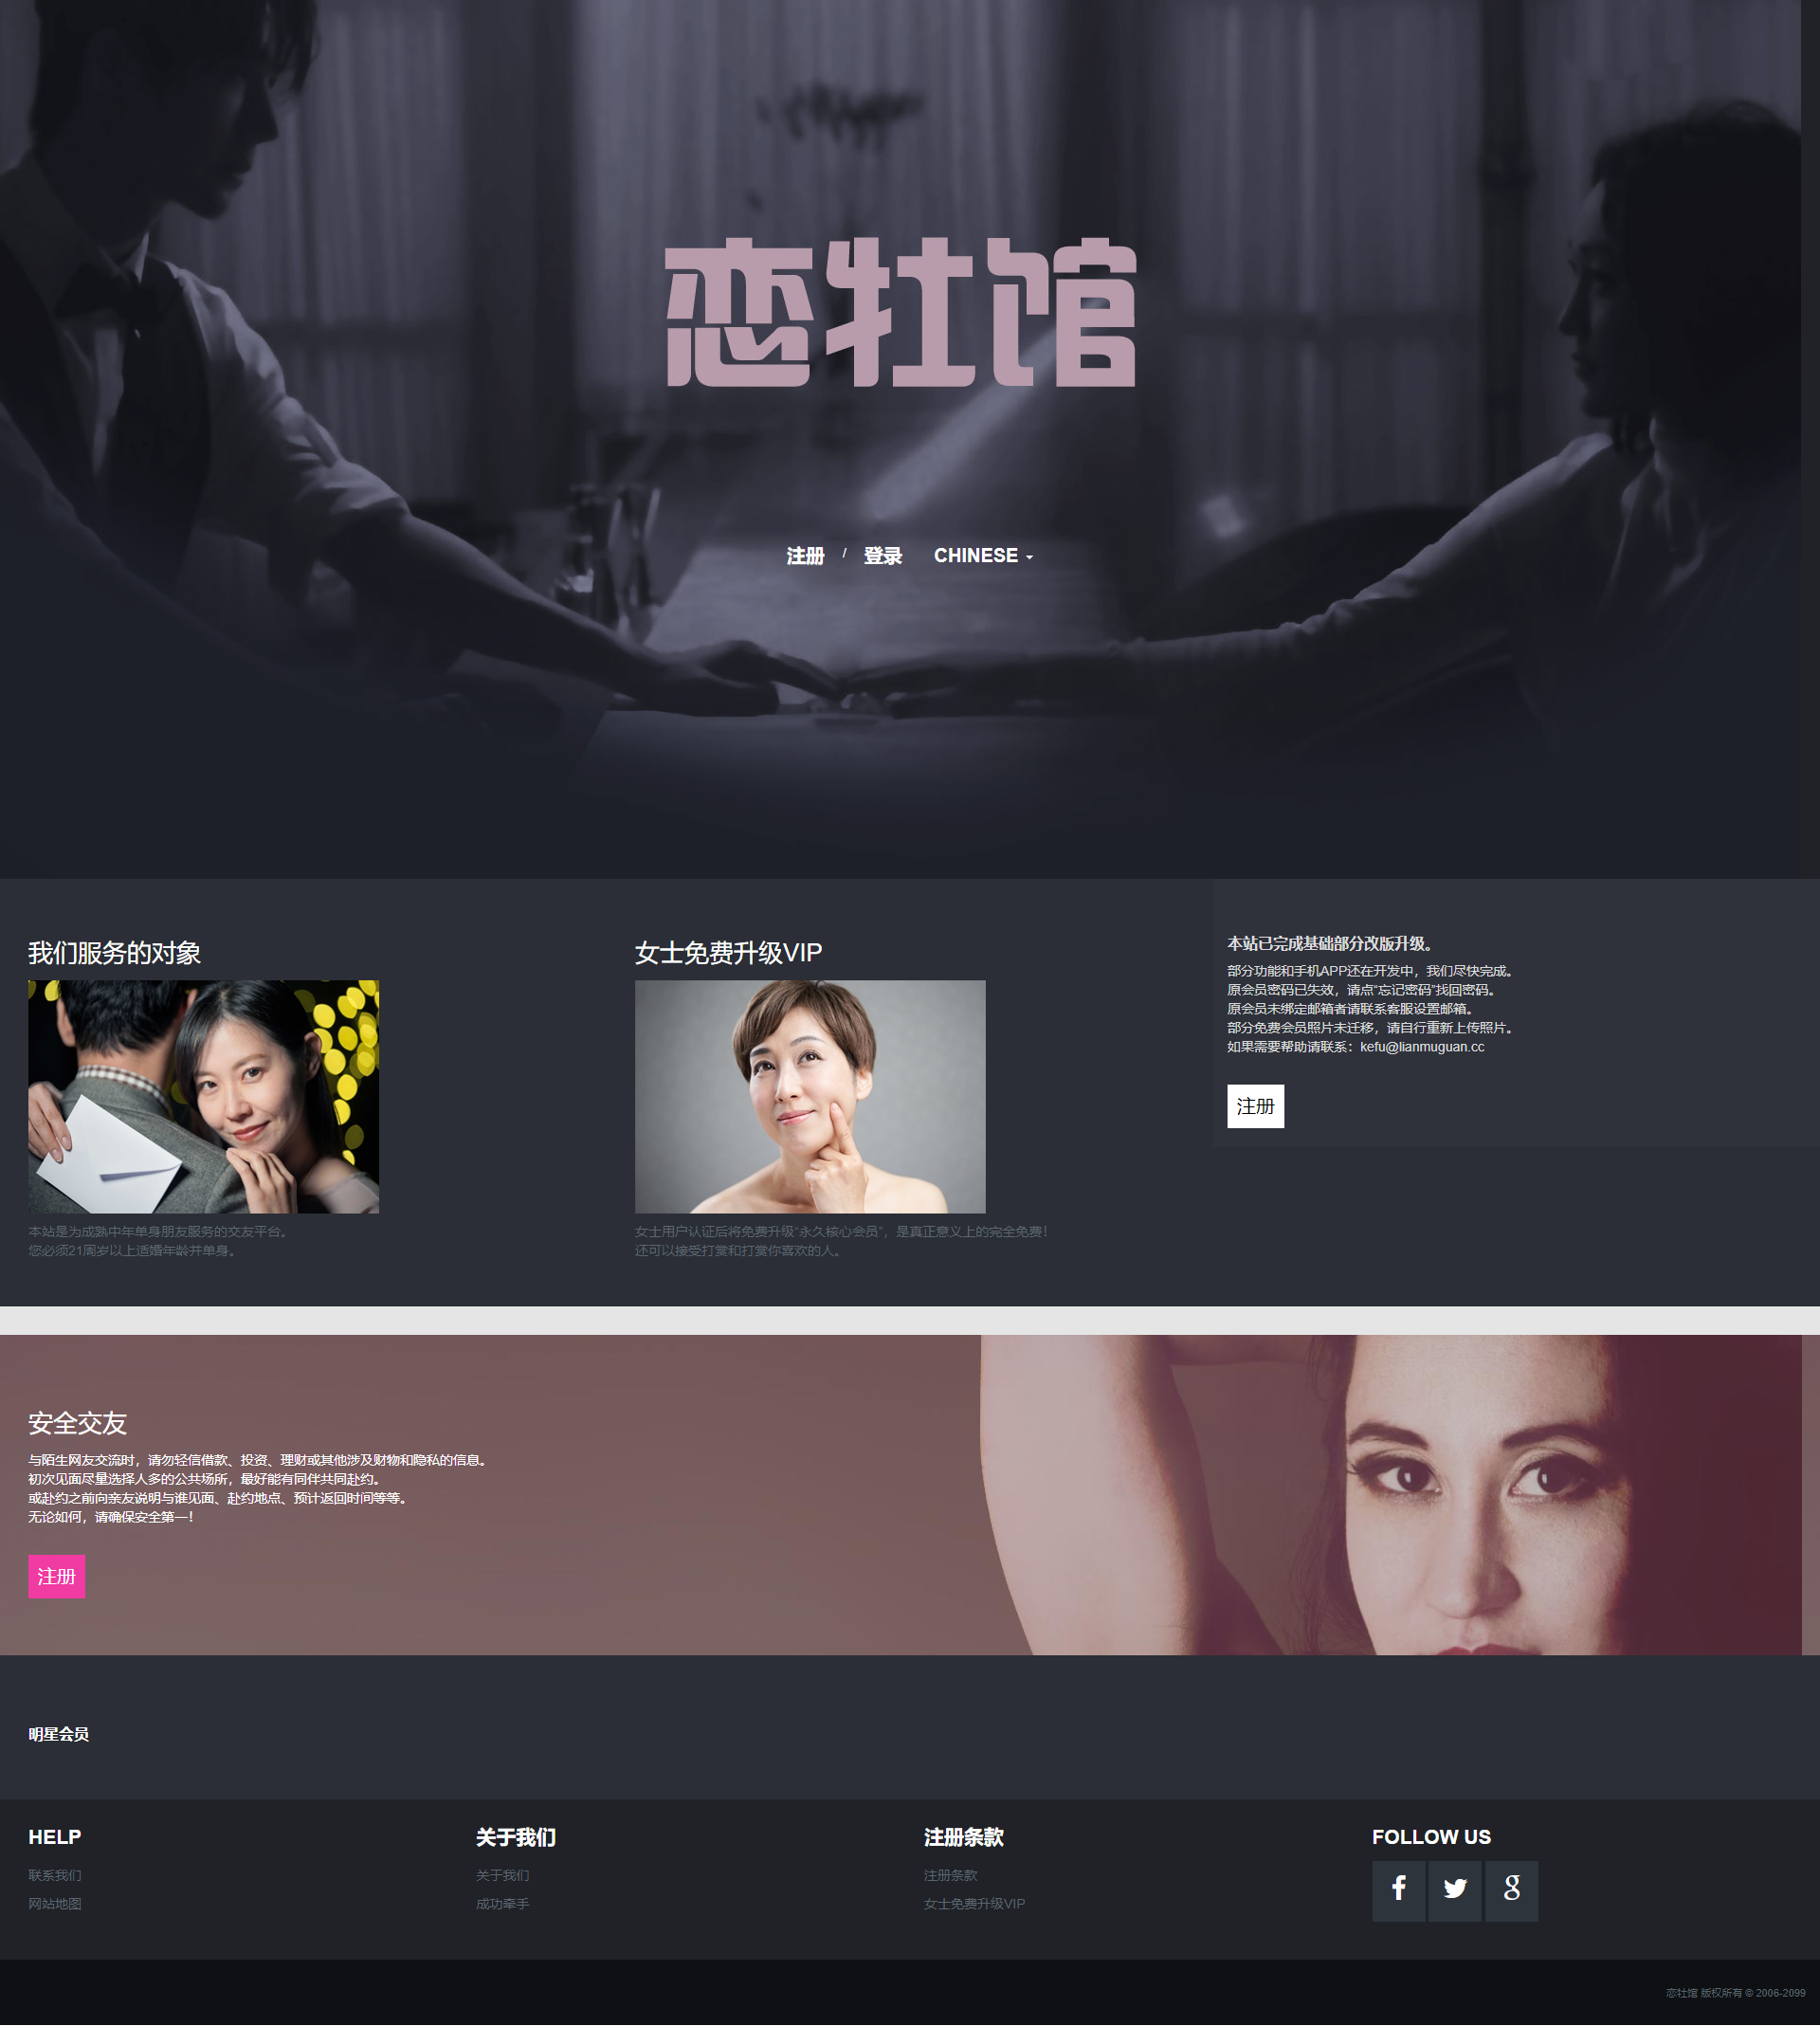 Chinese singles dating website lianmuguan.cc